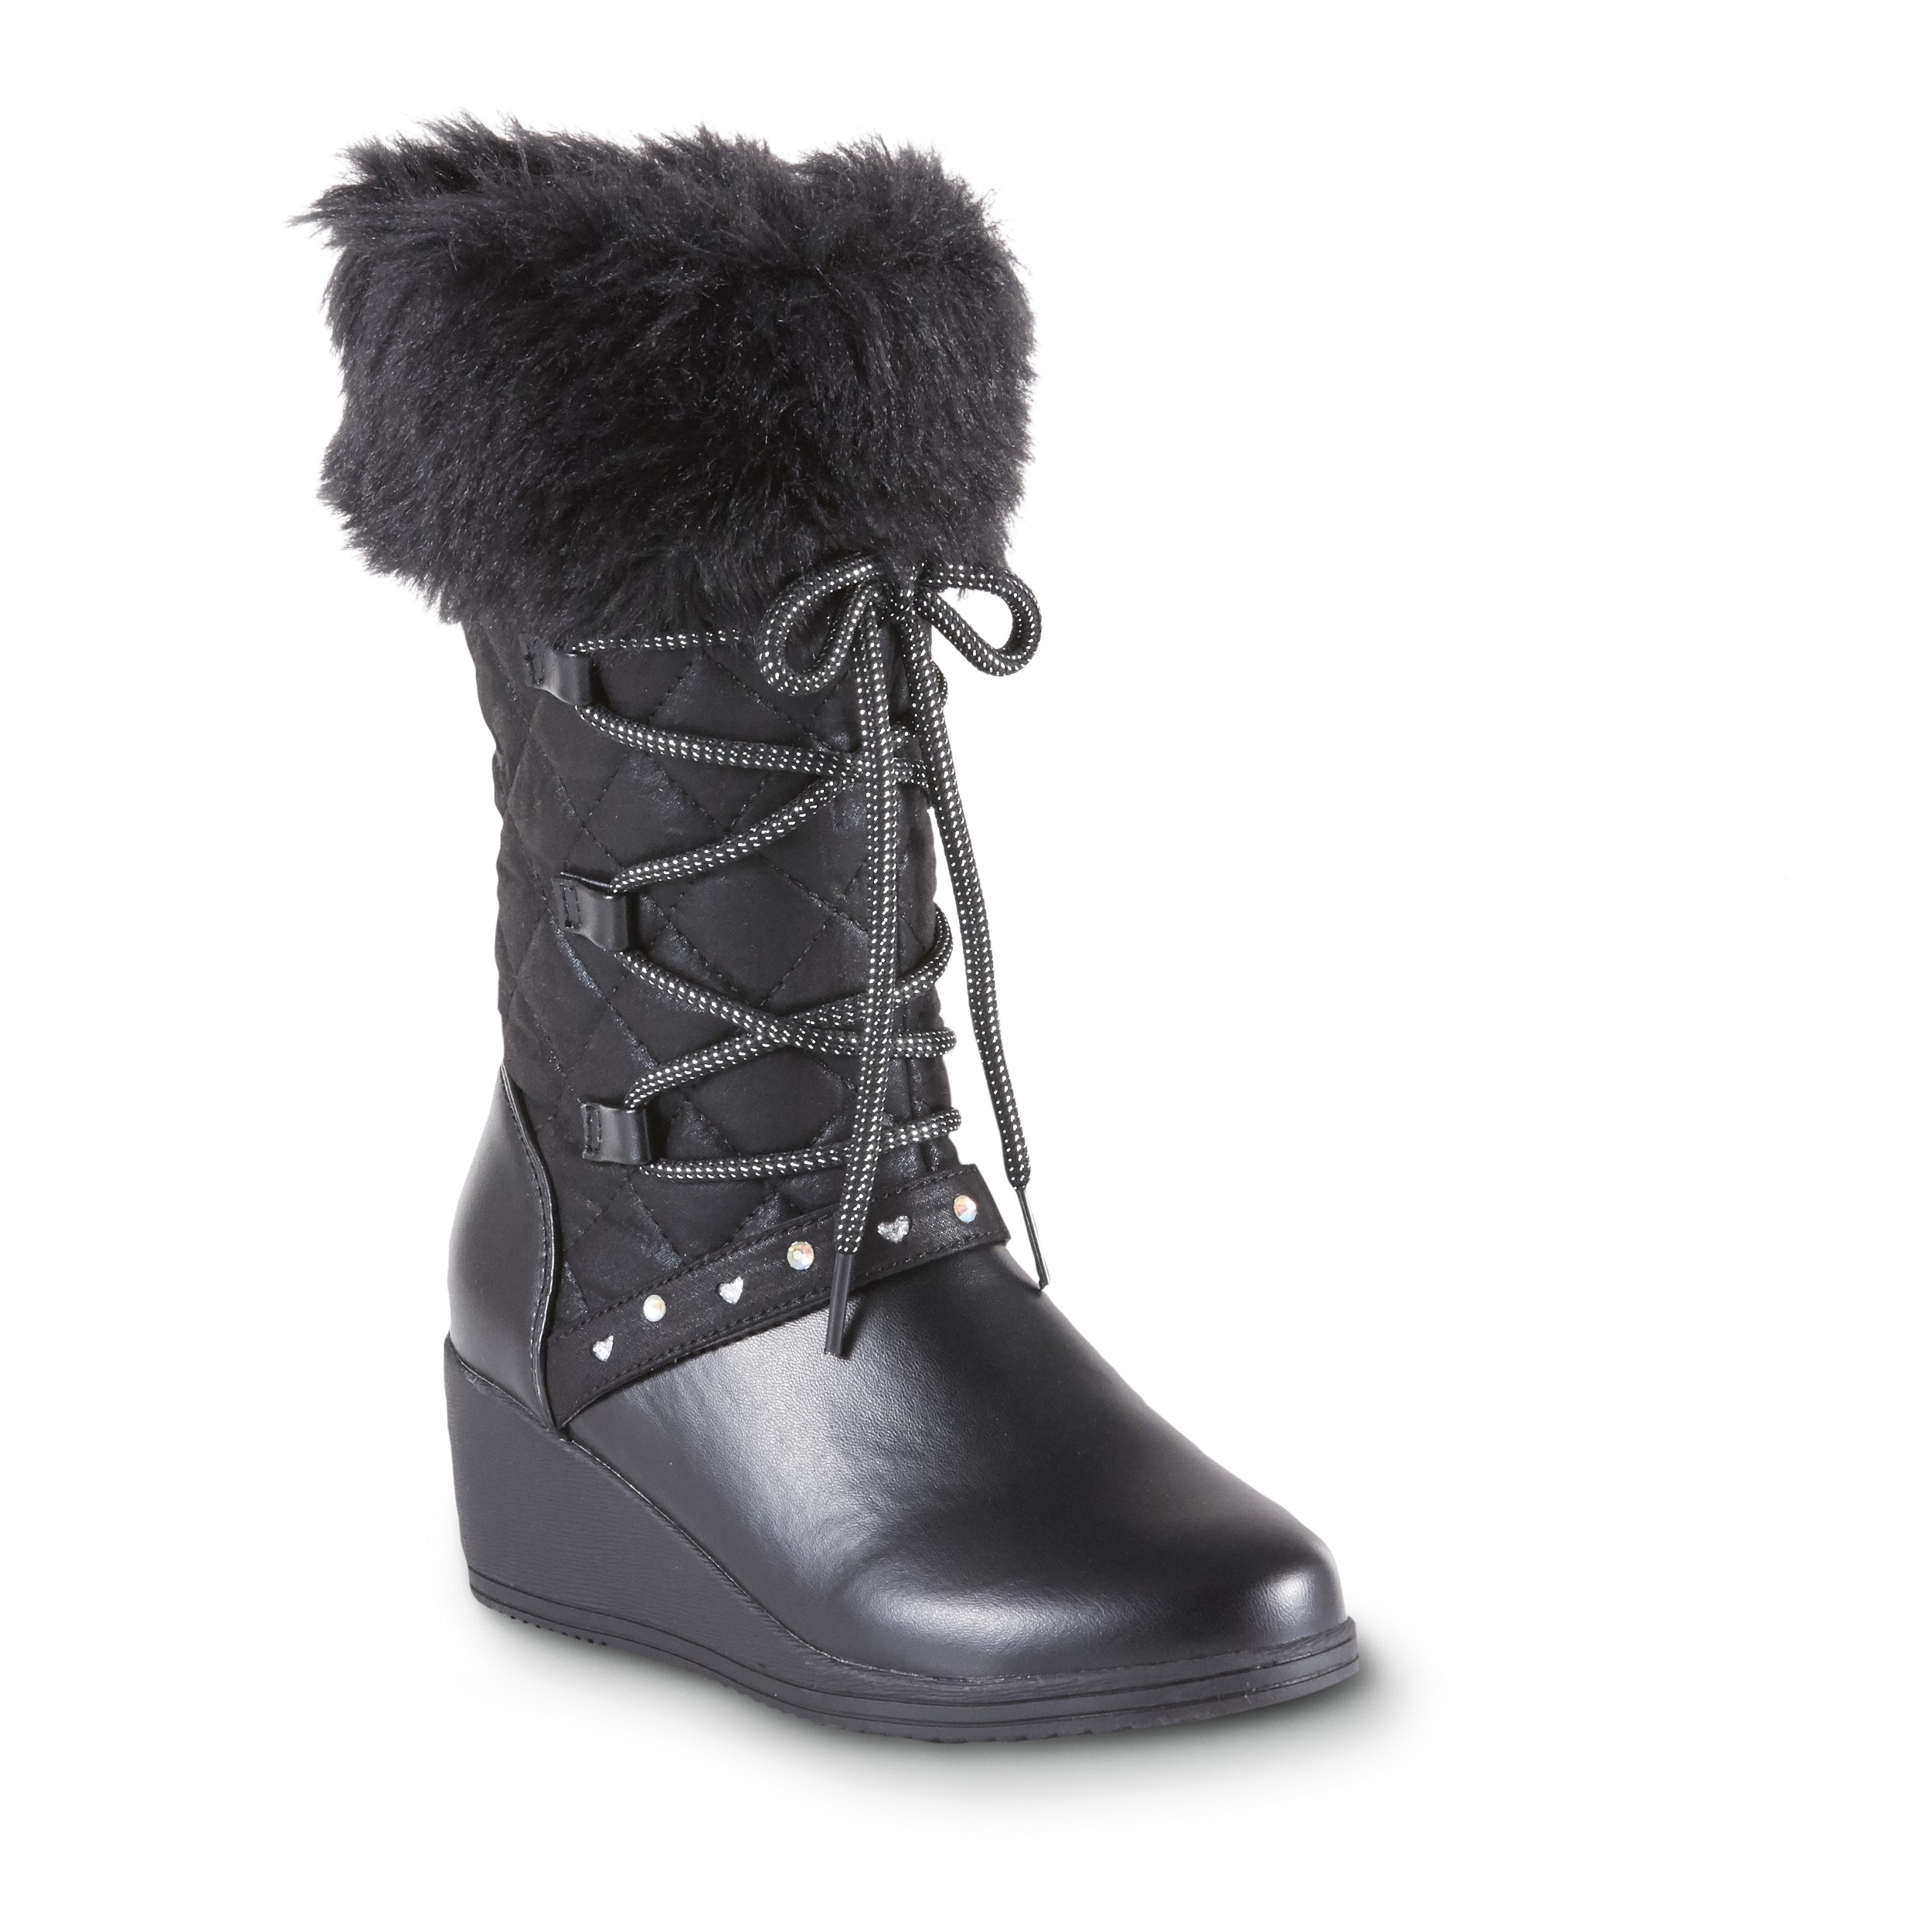 Roebuck & Co. Girls' Mika Winter Boot - Black